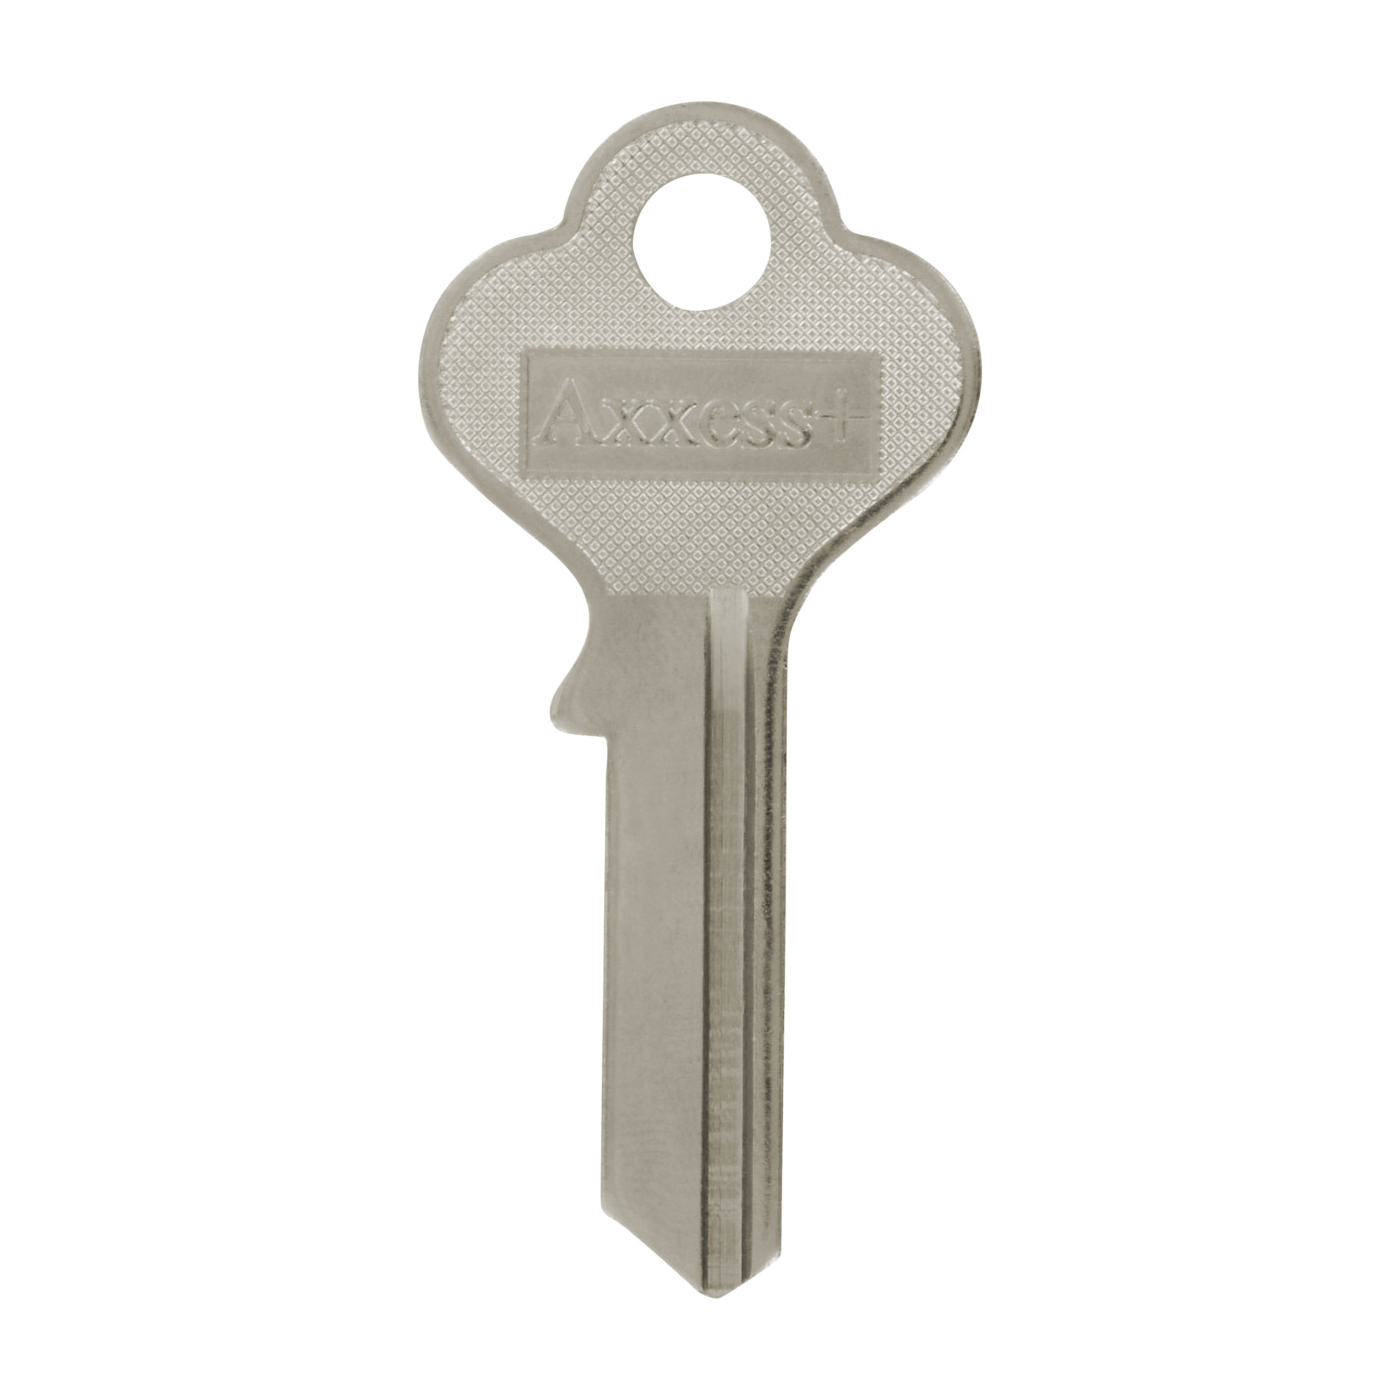 88528 Key Blank, Nickel-Plated, For: Taylor Locks